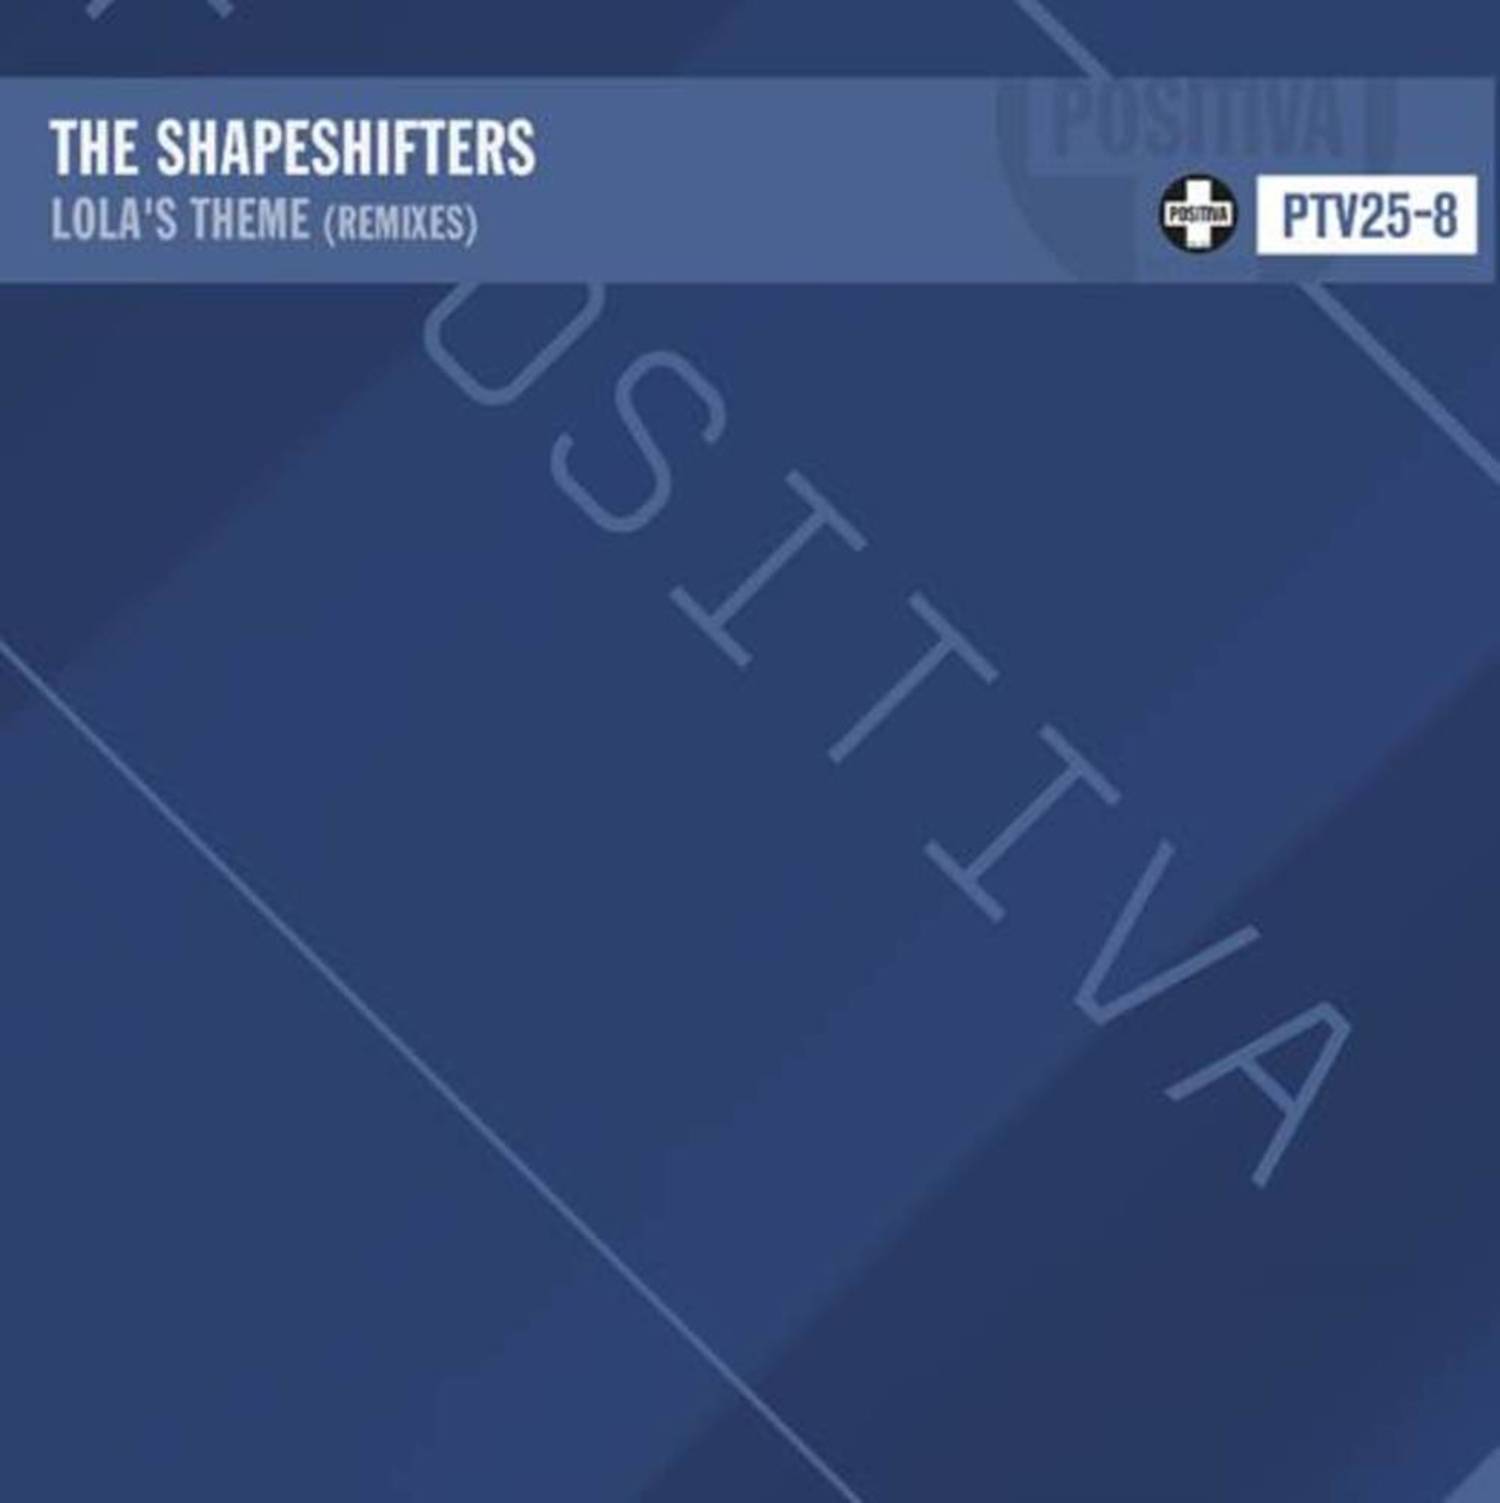 The Shapeshifters - LOLAS THEME 